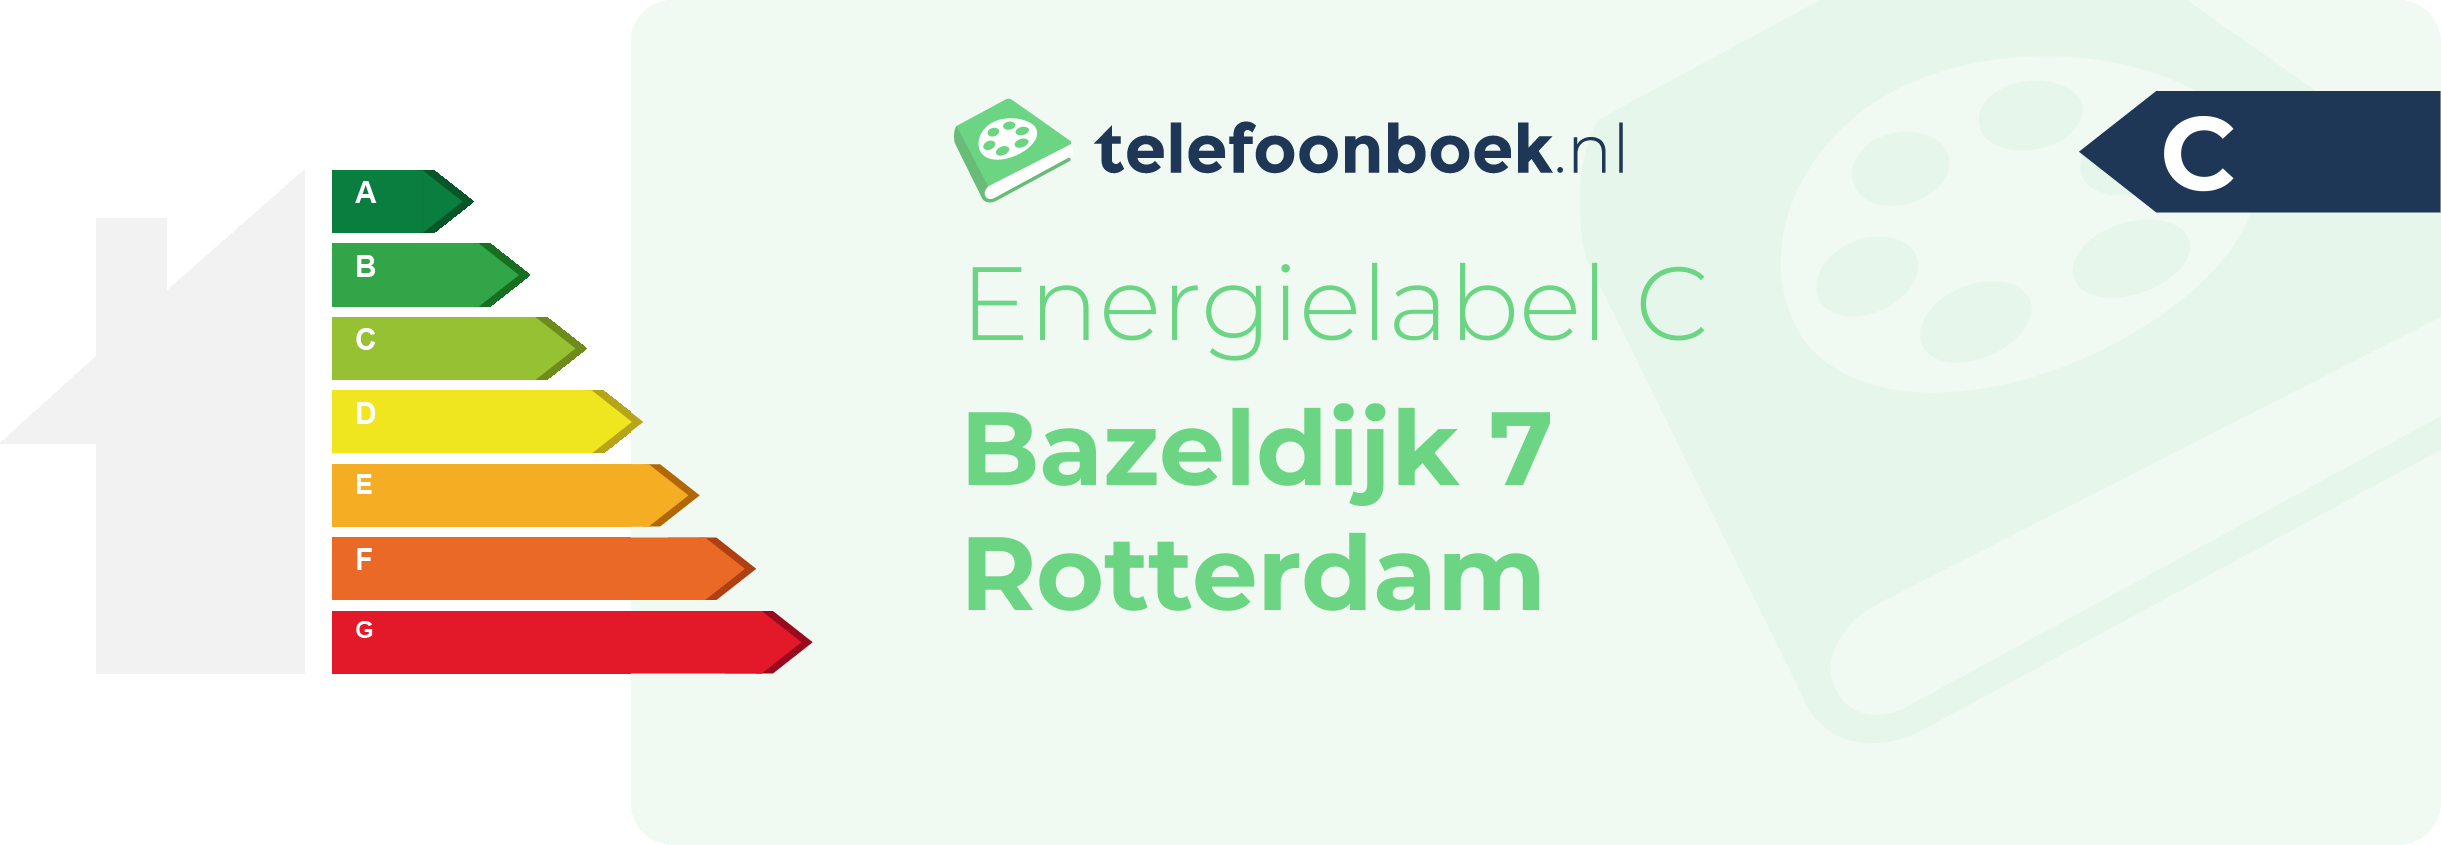 Energielabel Bazeldijk 7 Rotterdam